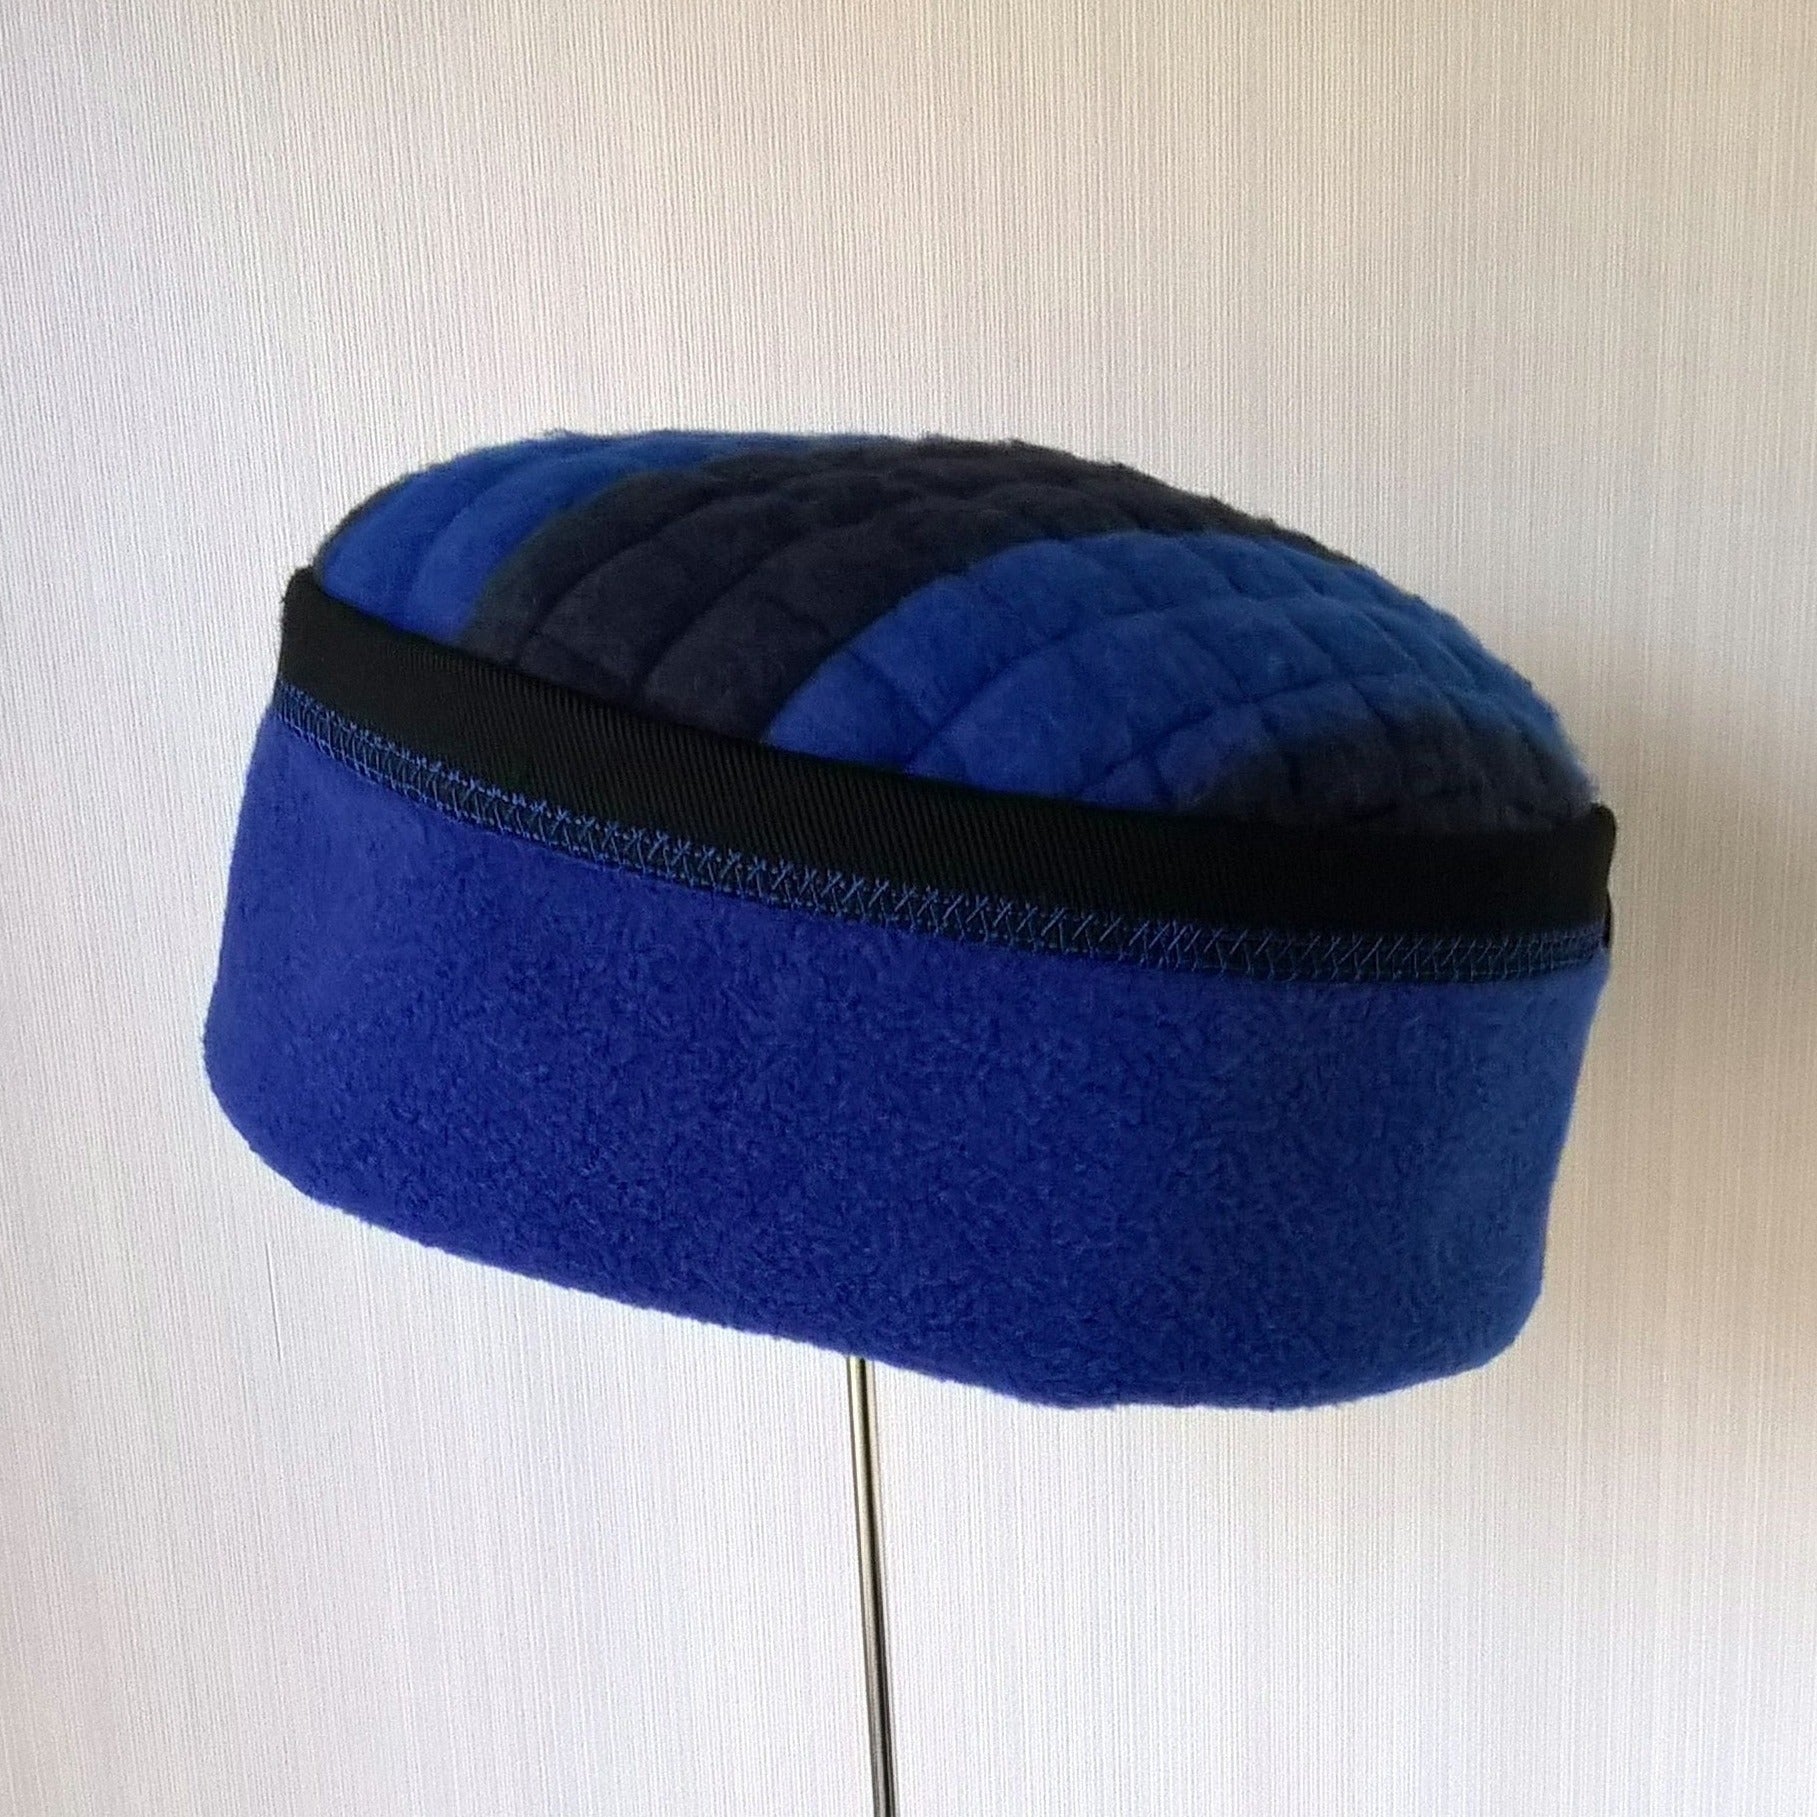 Brimless hat handmade in cobalt blue fleece and black cotton twill